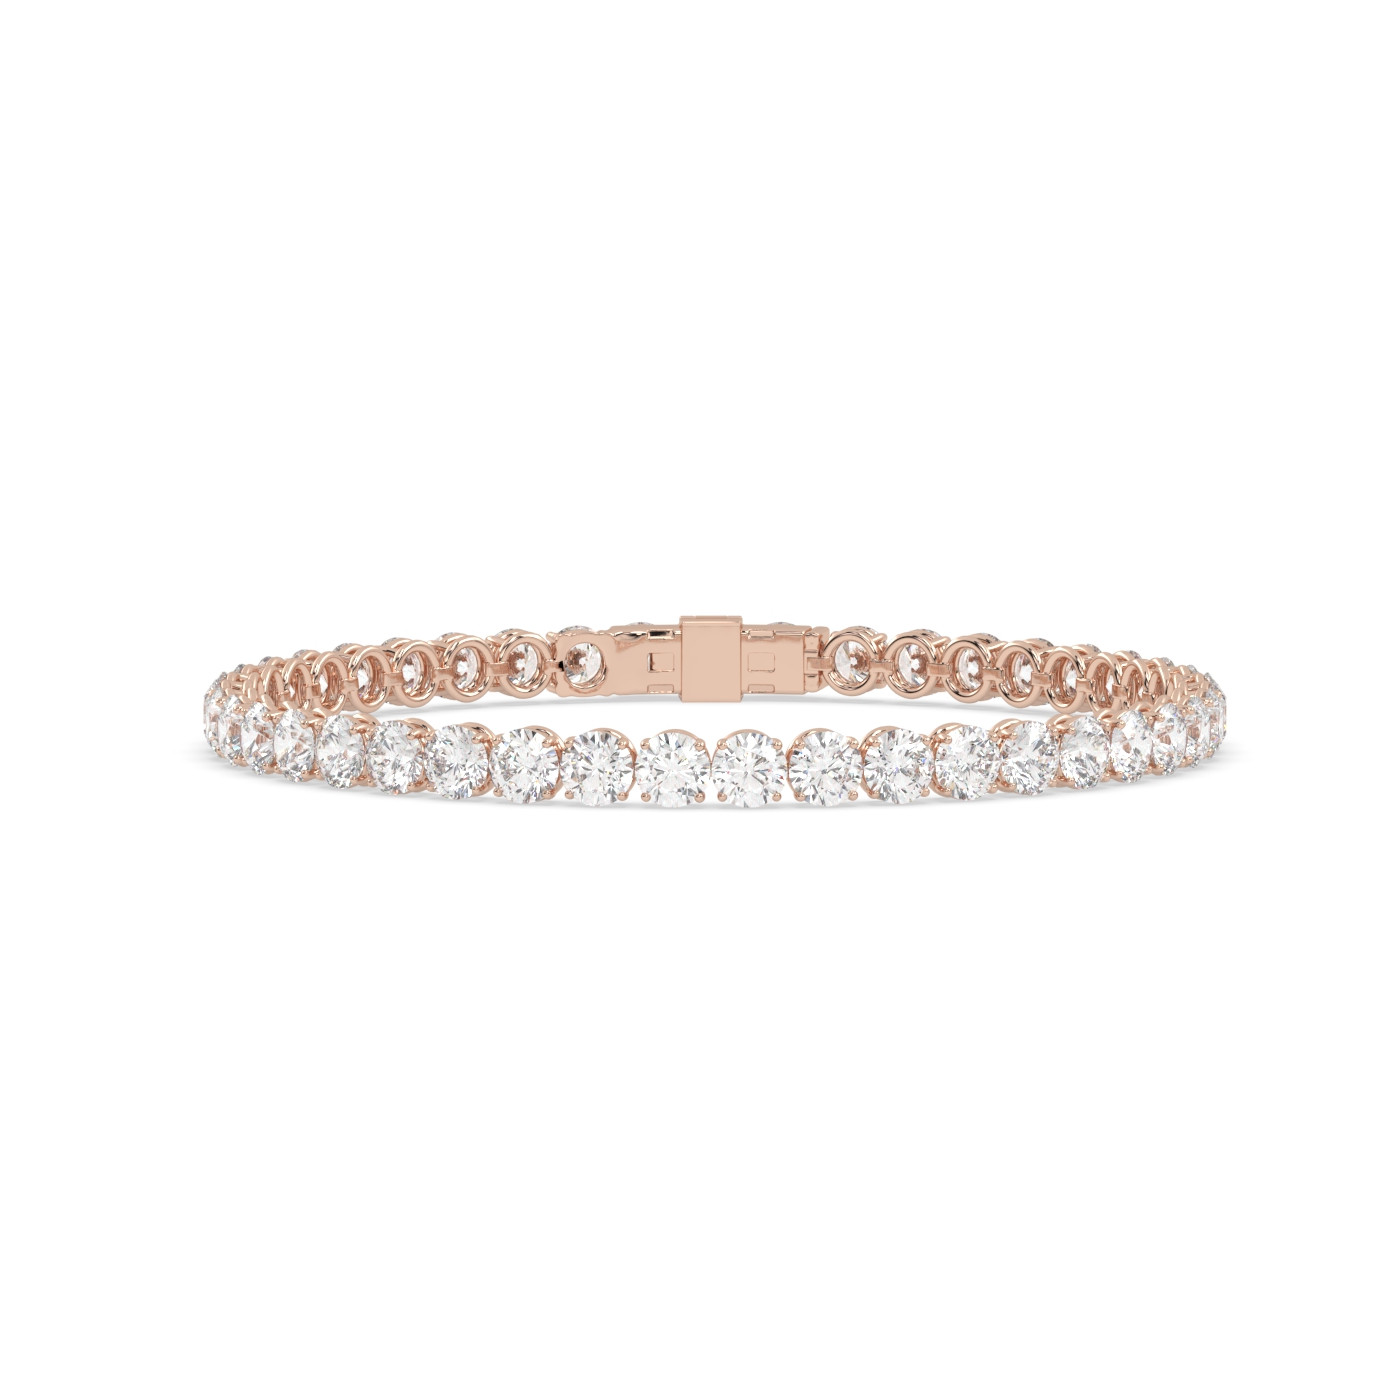 18k rose gold 14 carat round diamond tennis bracelet with modern american lock system Photos & images